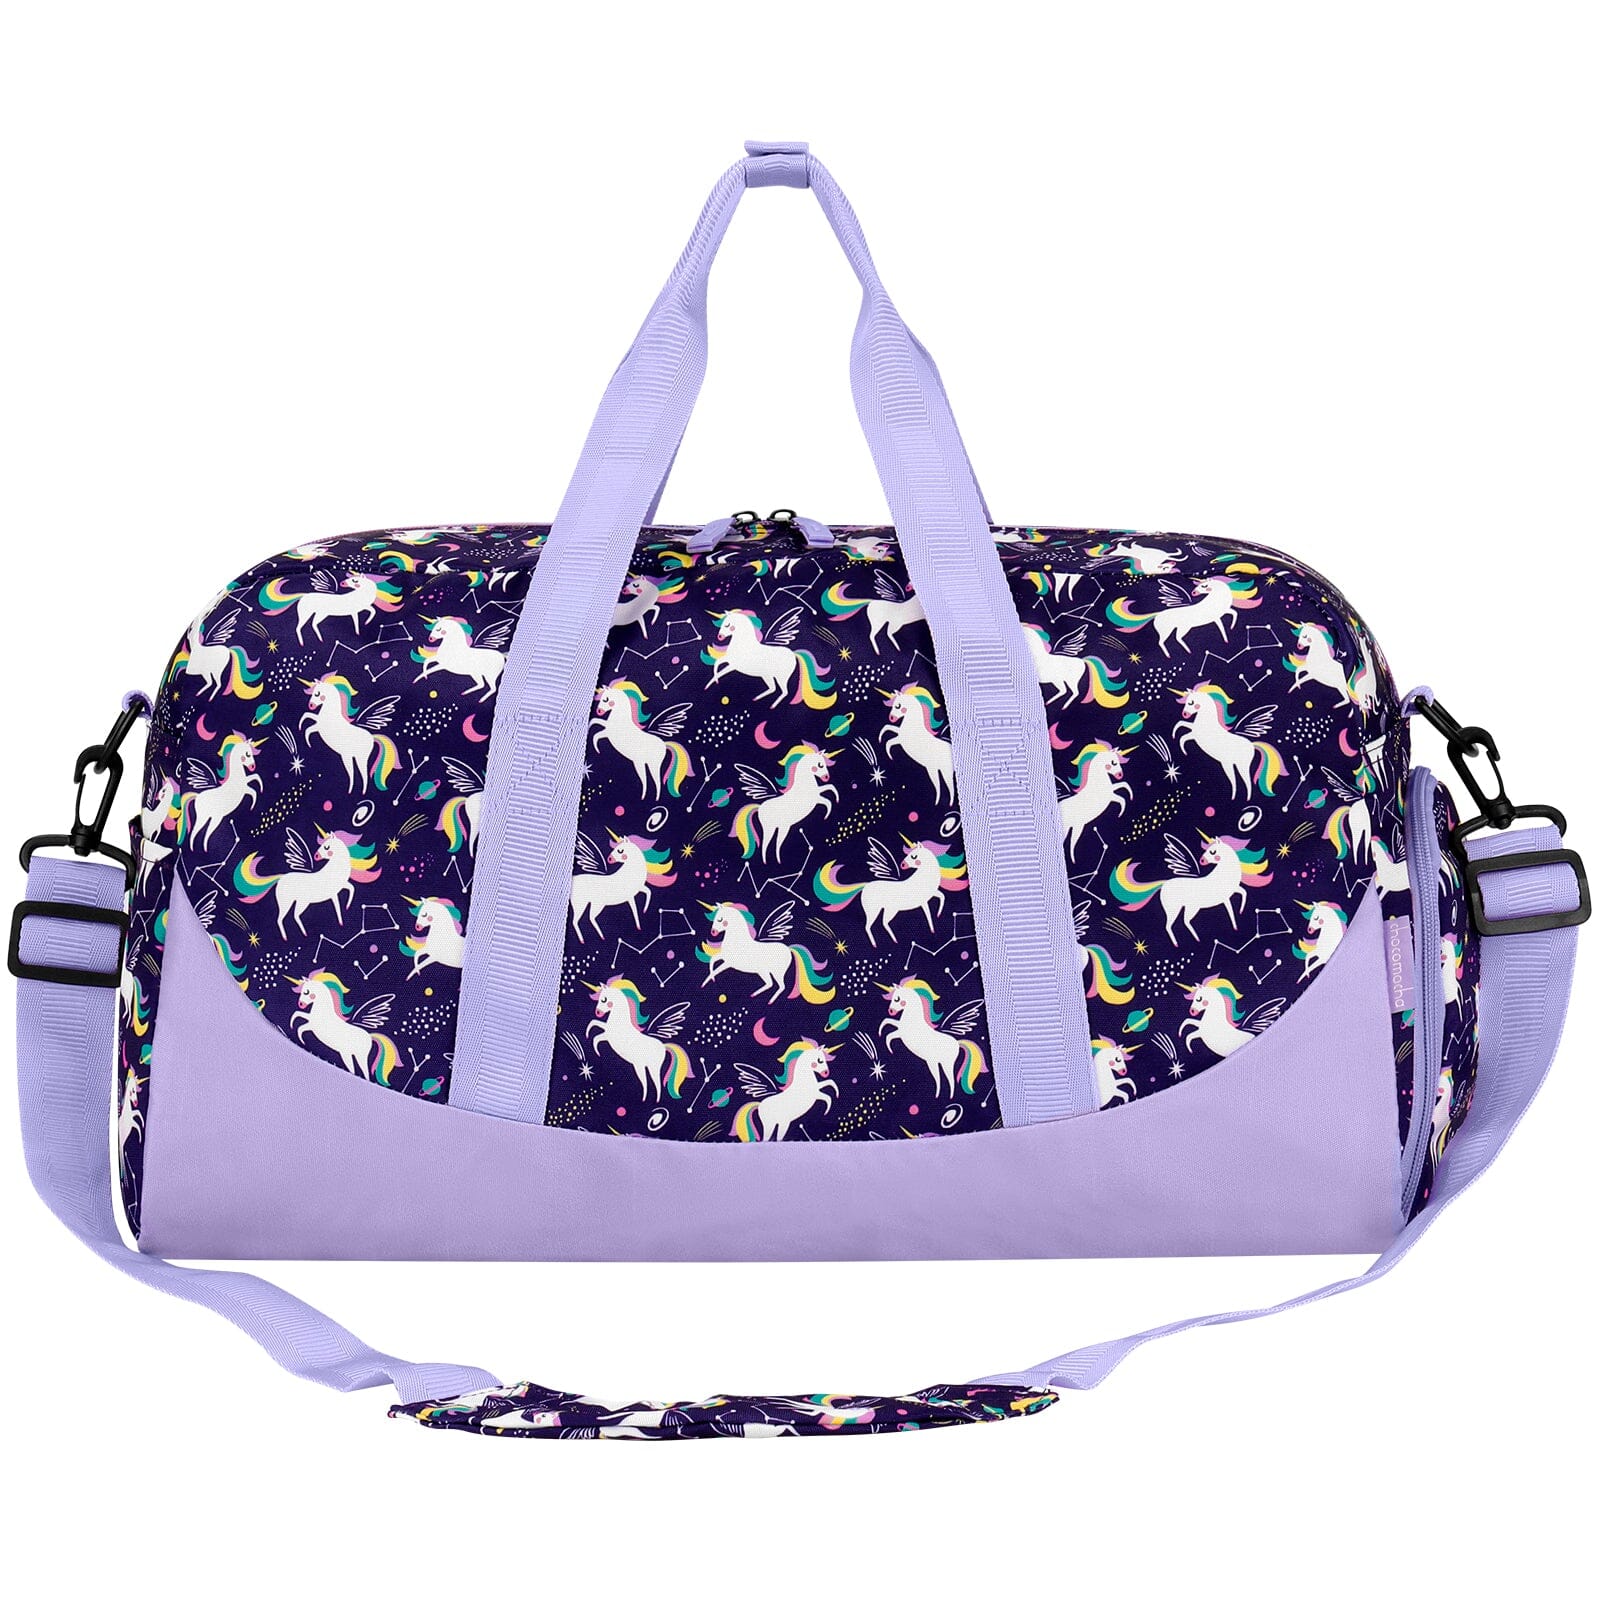 Choco Mocha Kids Purple Duffle Bag for Girls, Kids Unicorn Travel Bag 20.08*9.06*10.63 Inches chocomochakids 